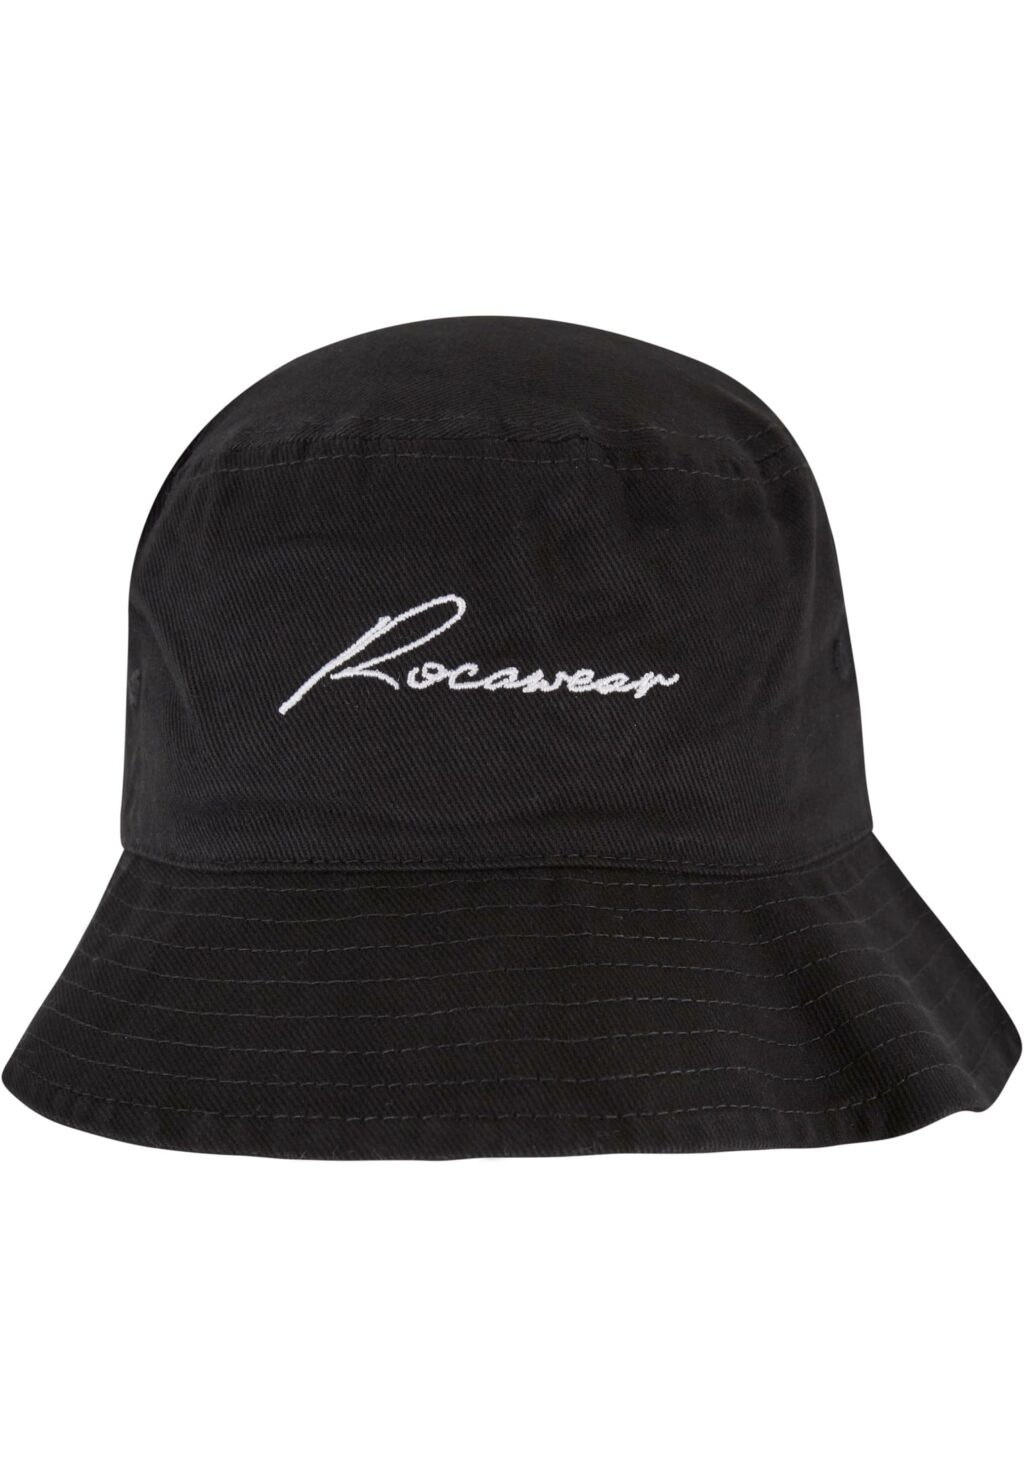 Rocawear Carino Bucket hat black one RWCA024